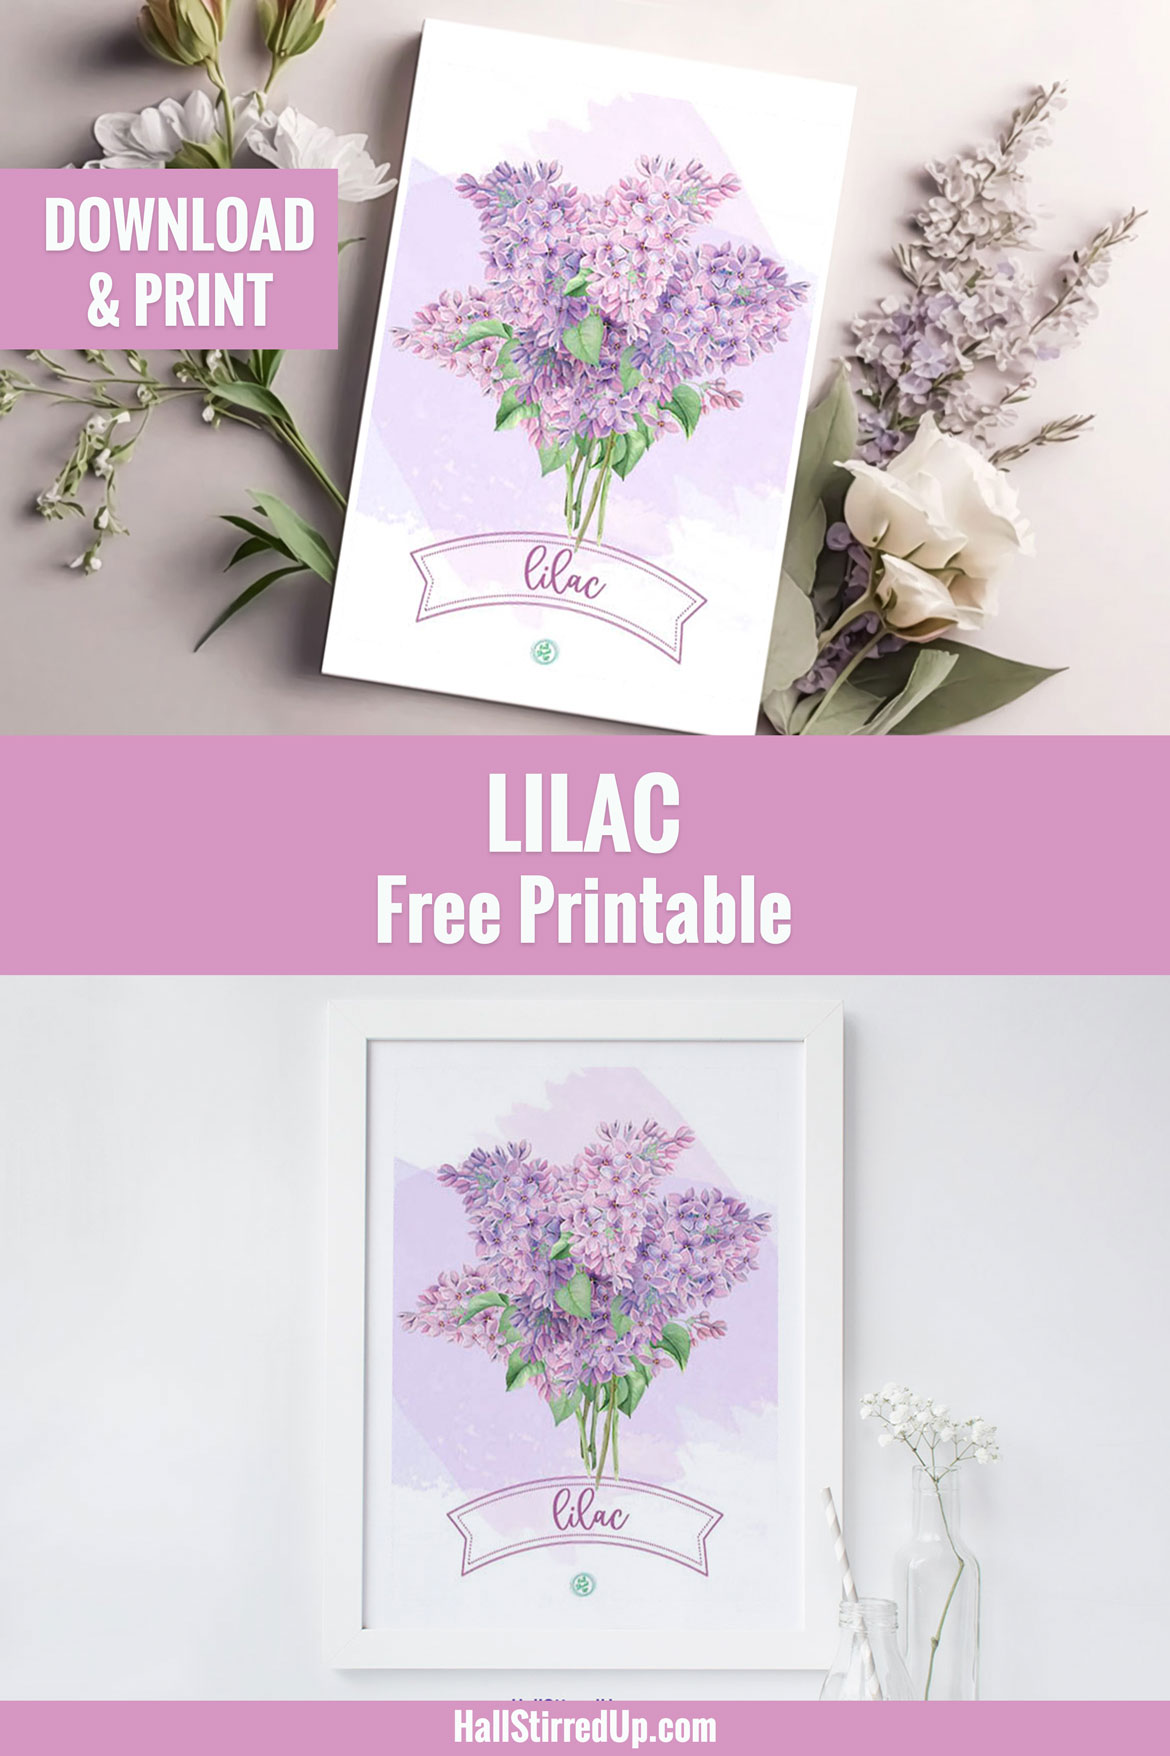 I love lilacs Includes a pretty free printable